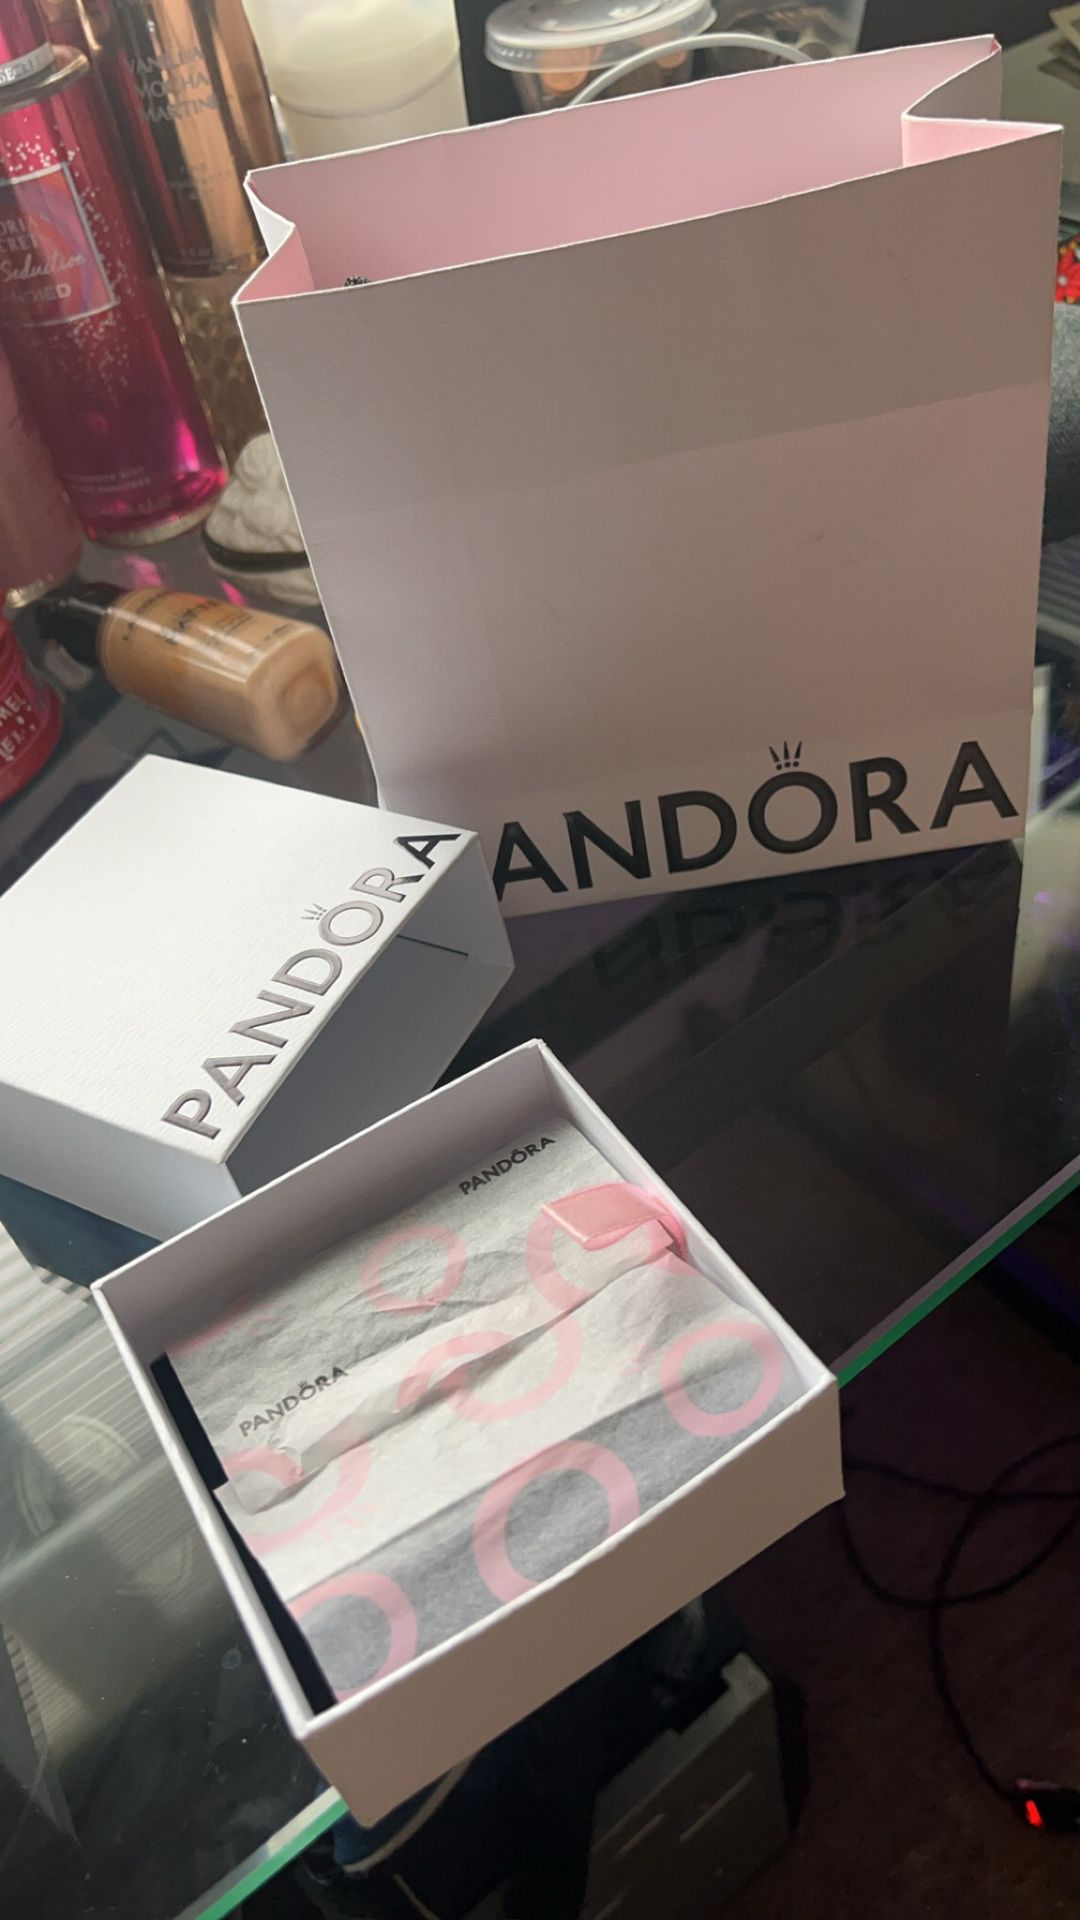 pandora charm bracelet and pandora charm case/box.